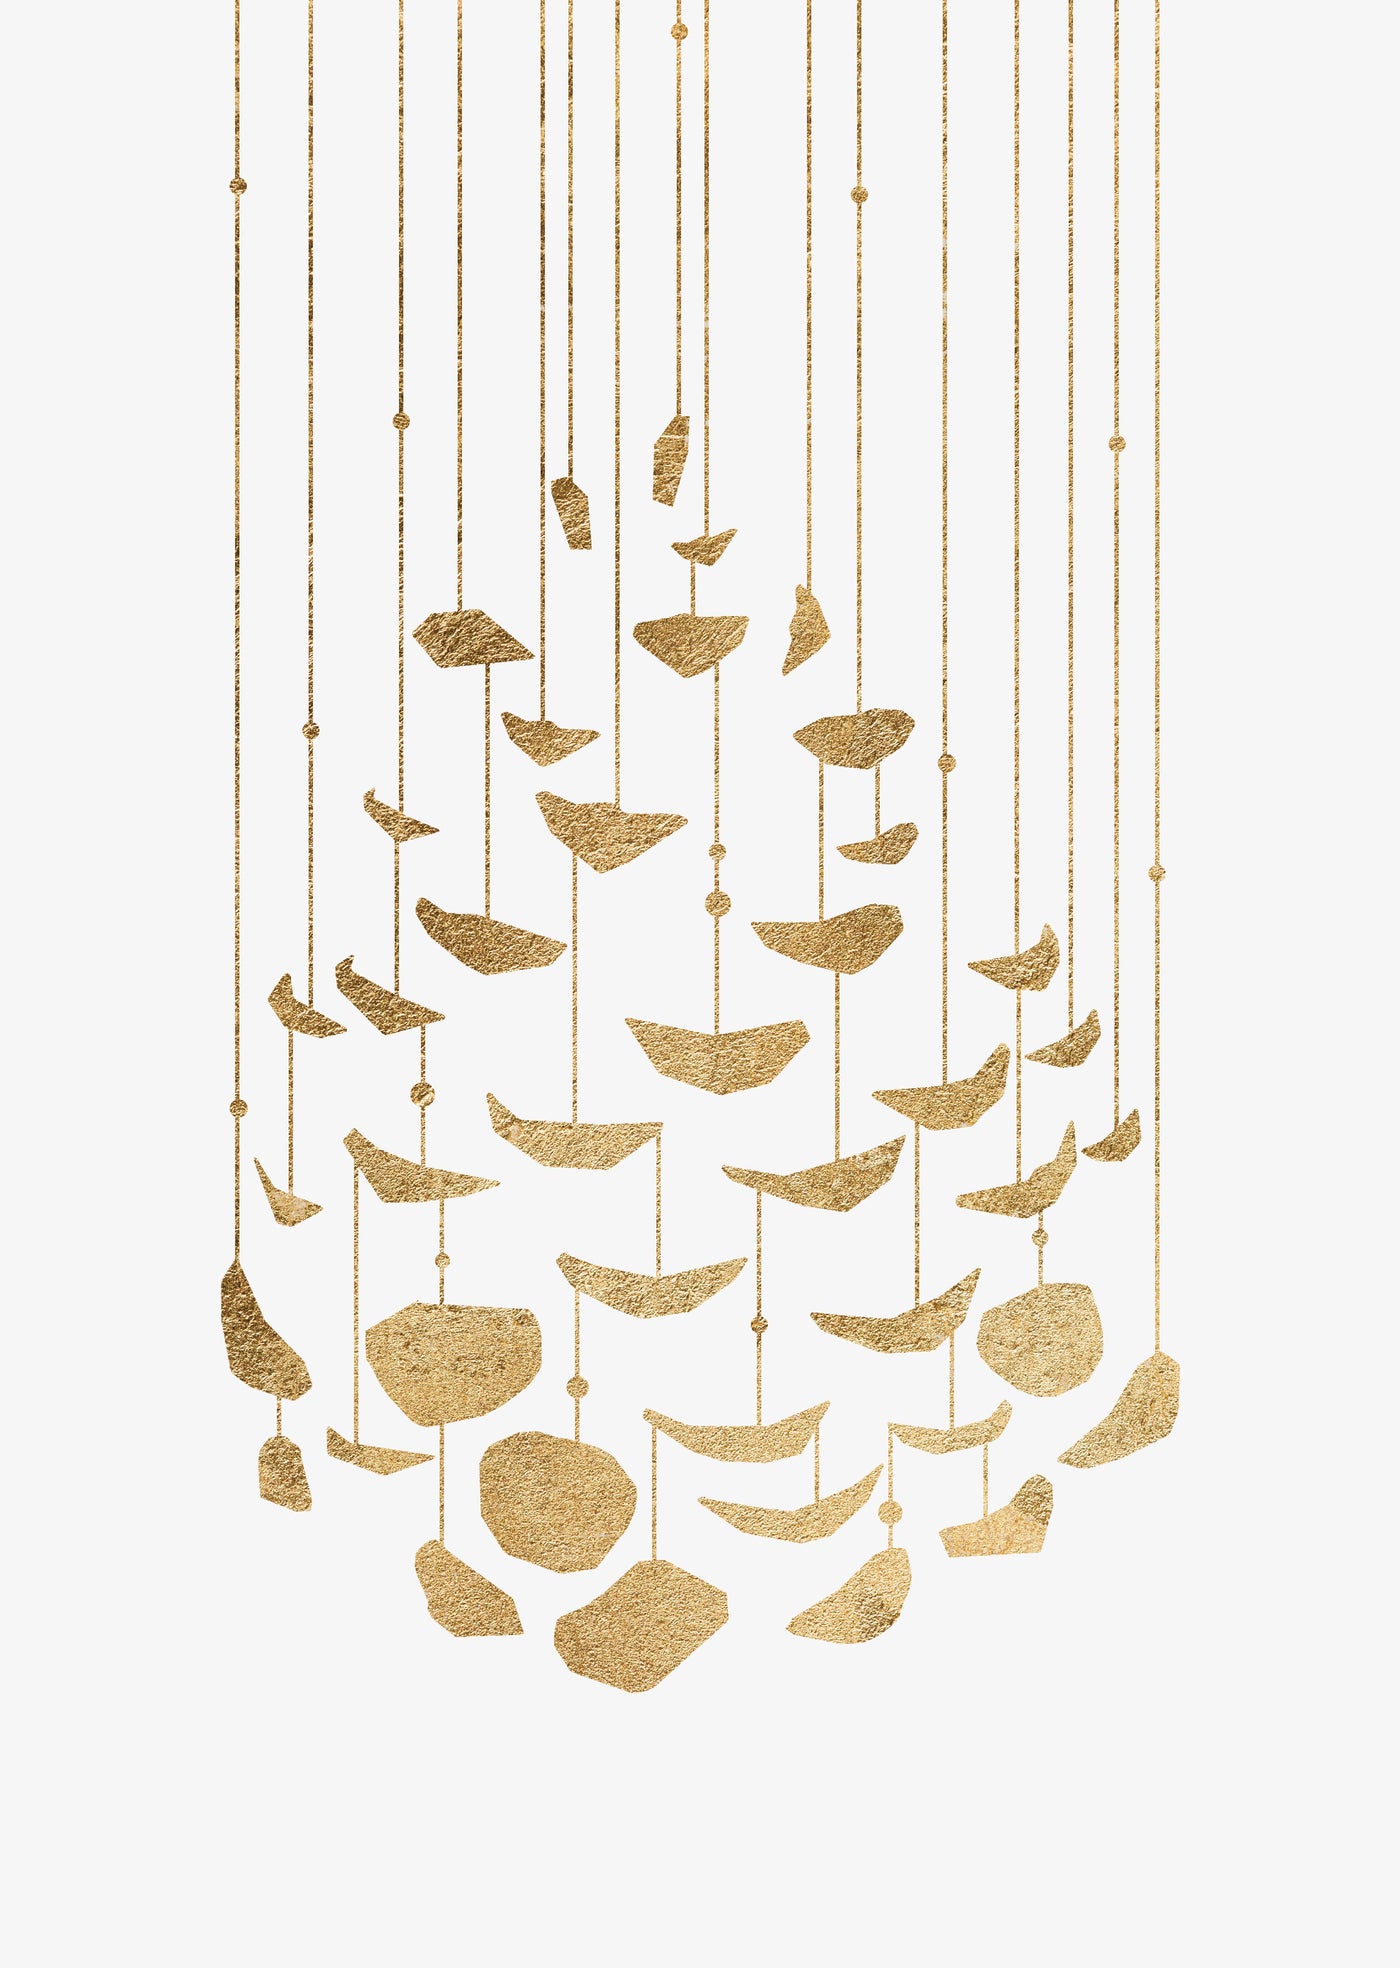 Suspended Gold Pinecone Wall Art Print, Contemporary and Stylish Christmas Decoration Alternative Xmas Decor